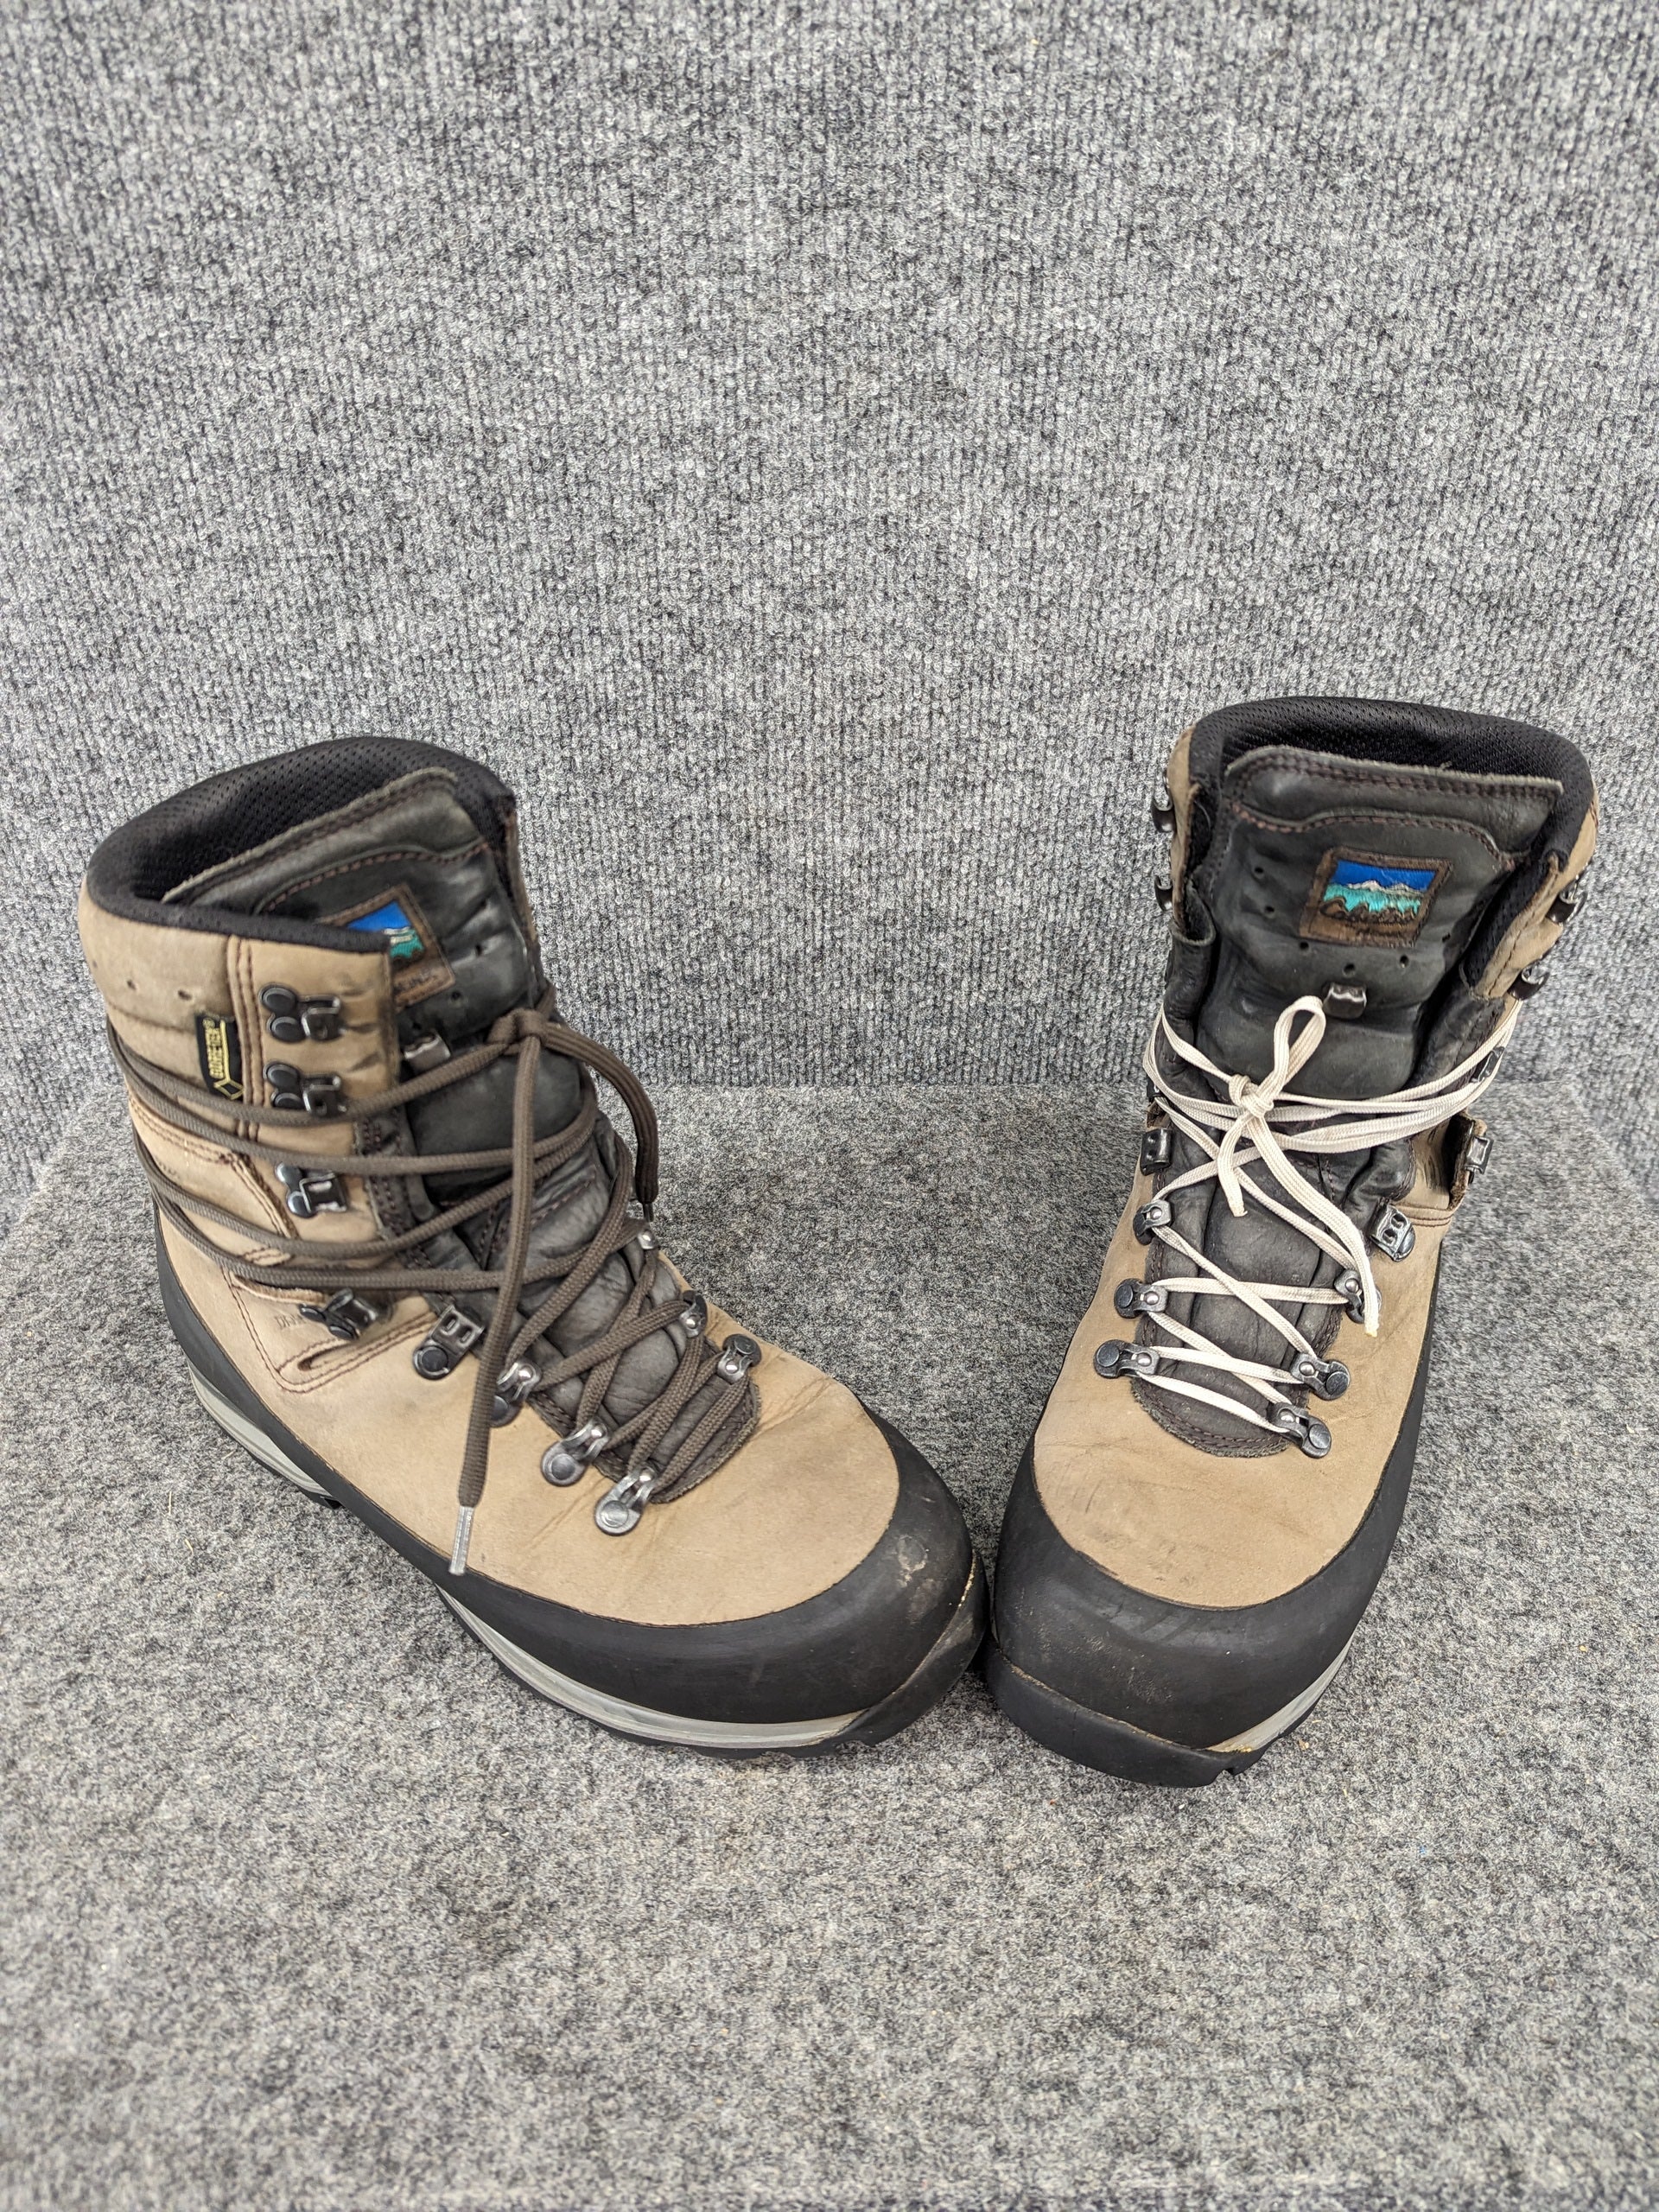 Men's Mountaineering Boots – Rambleraven Gear Trader